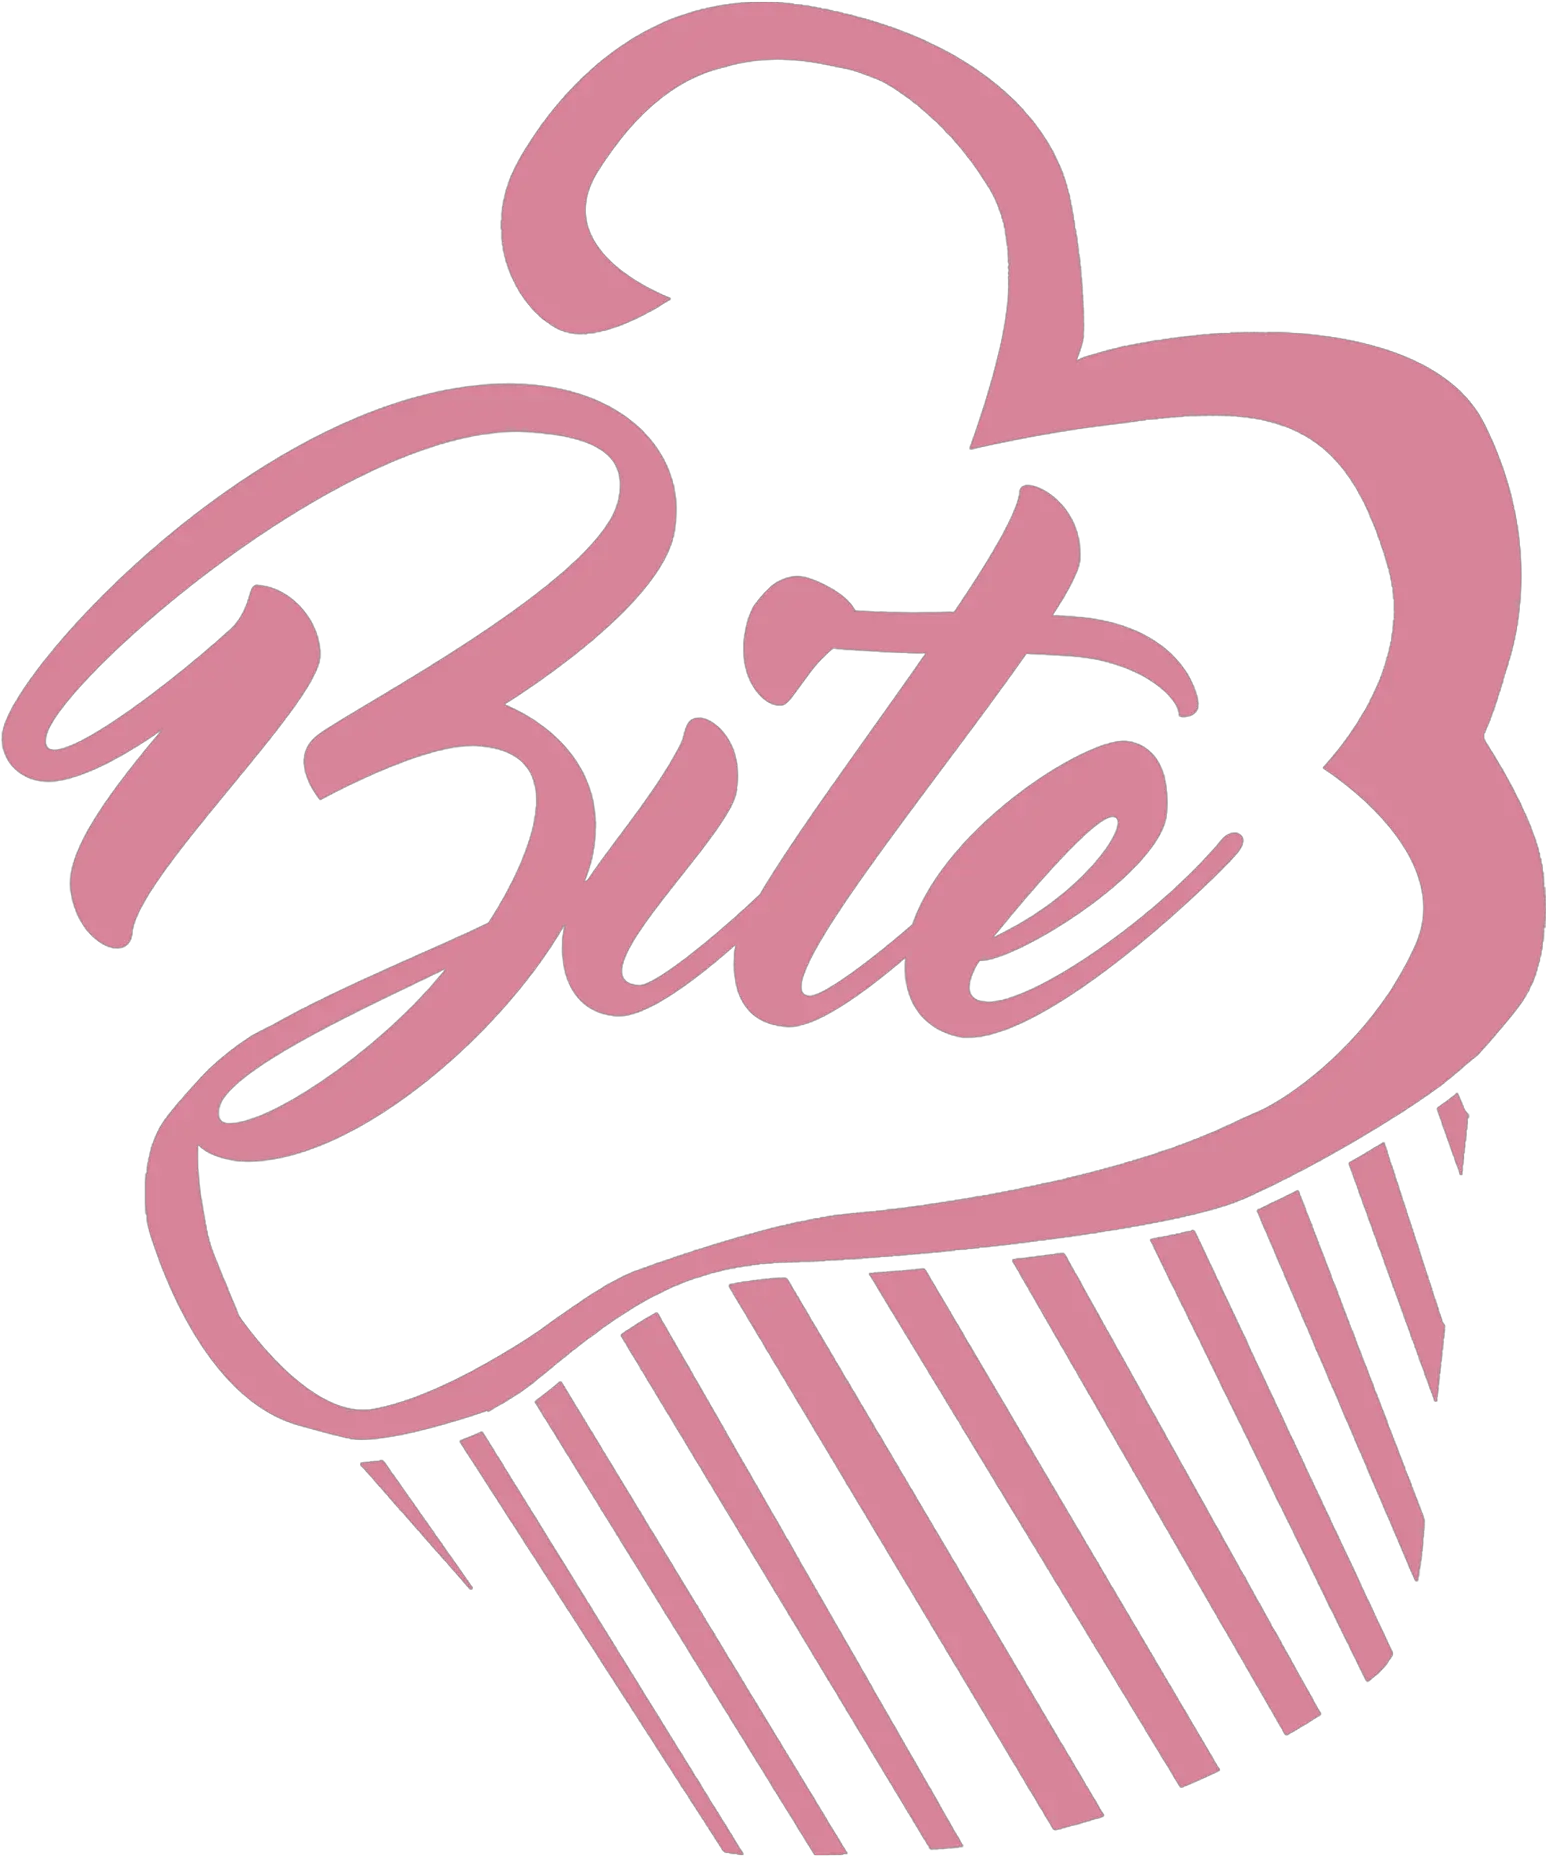 Download Cupcake Logo Design Bite Born To Be Wild Transparent Background Cupcakes Logo Design Png Bite Png